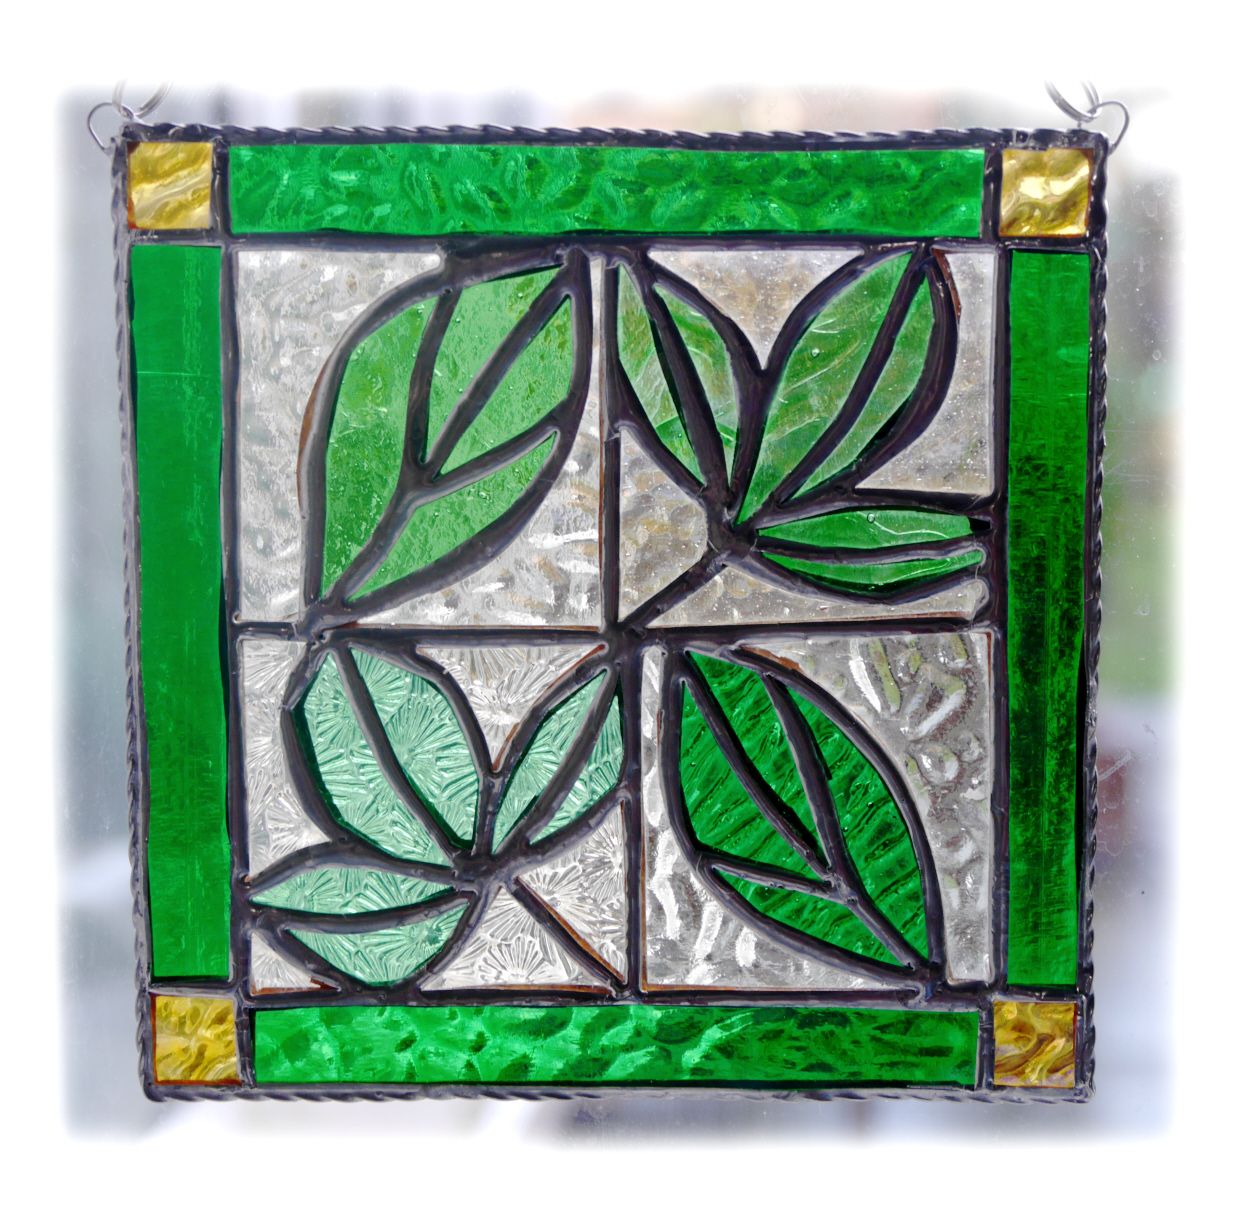 GREEN Leaf Tile 003 Green #1902 FREE 27.50